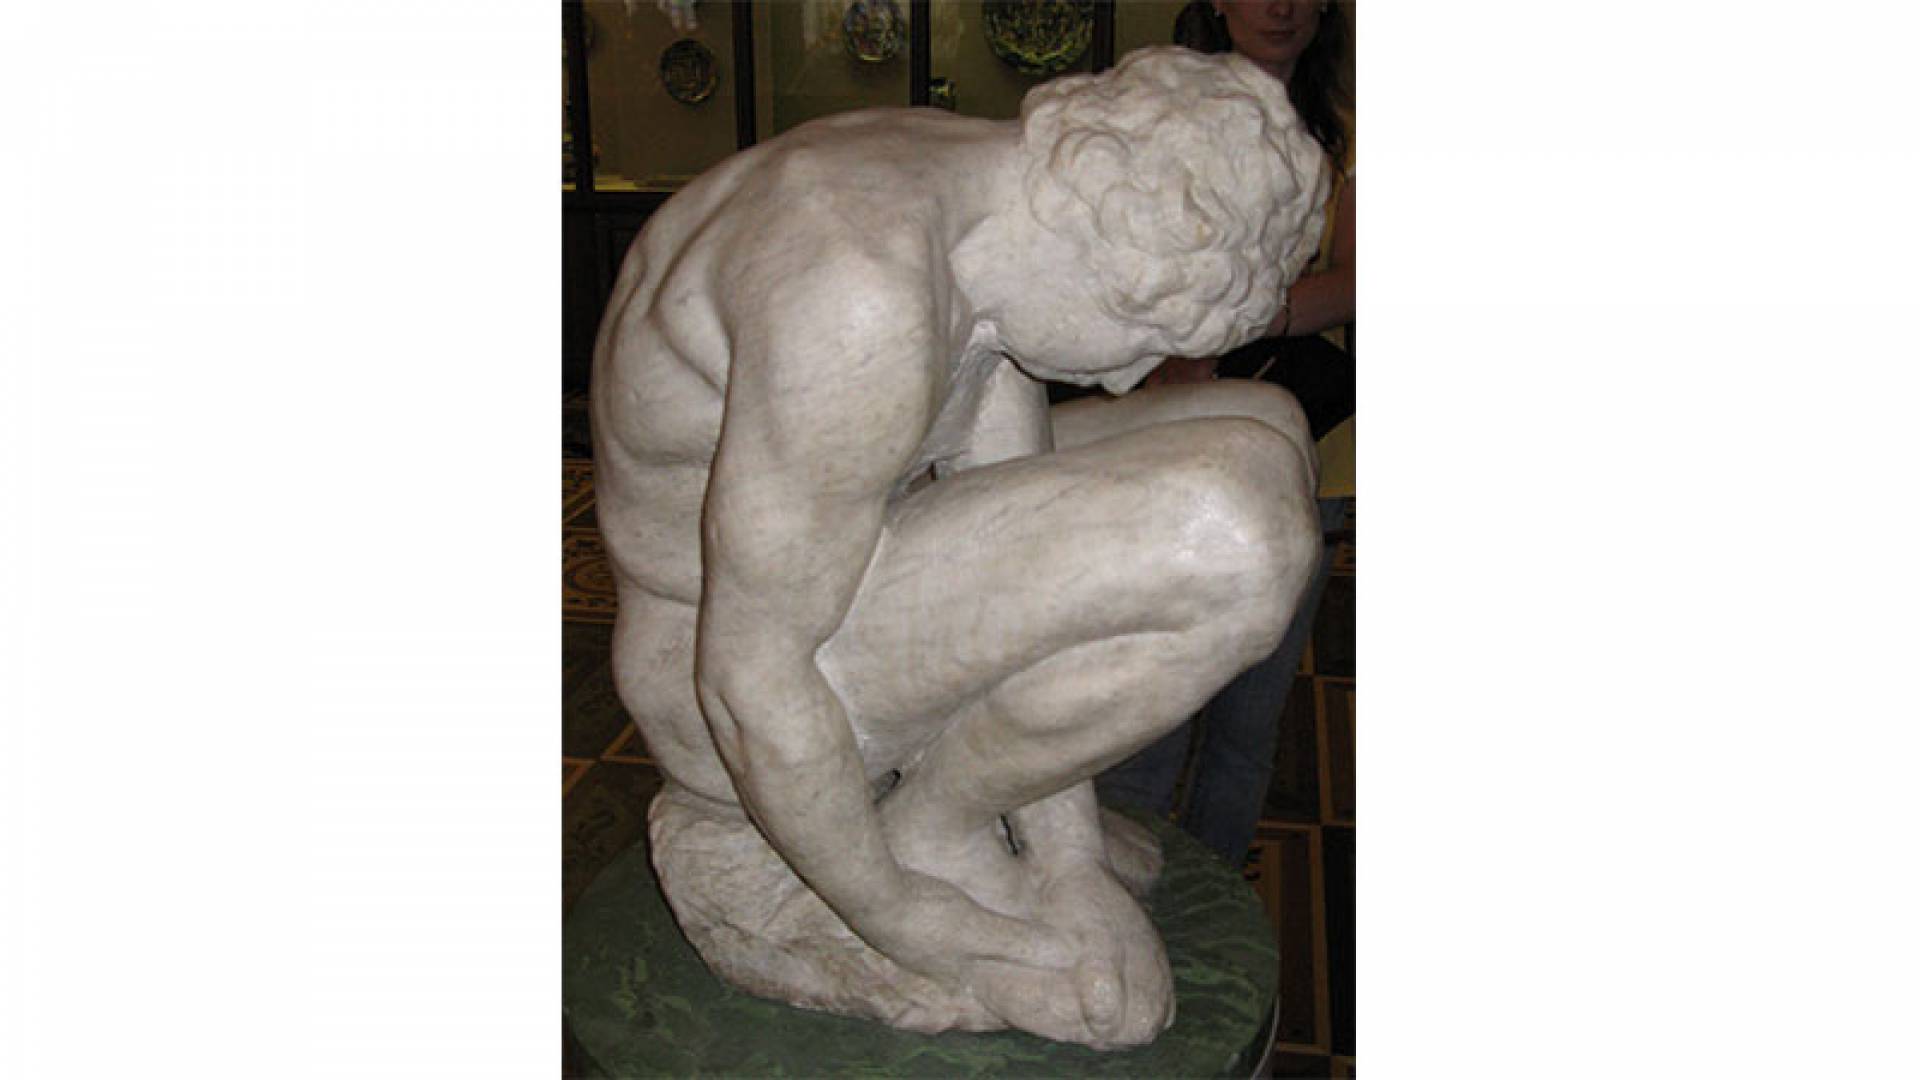 HERMITAGE, Crouching Boy, By Michelangelo, Room 237